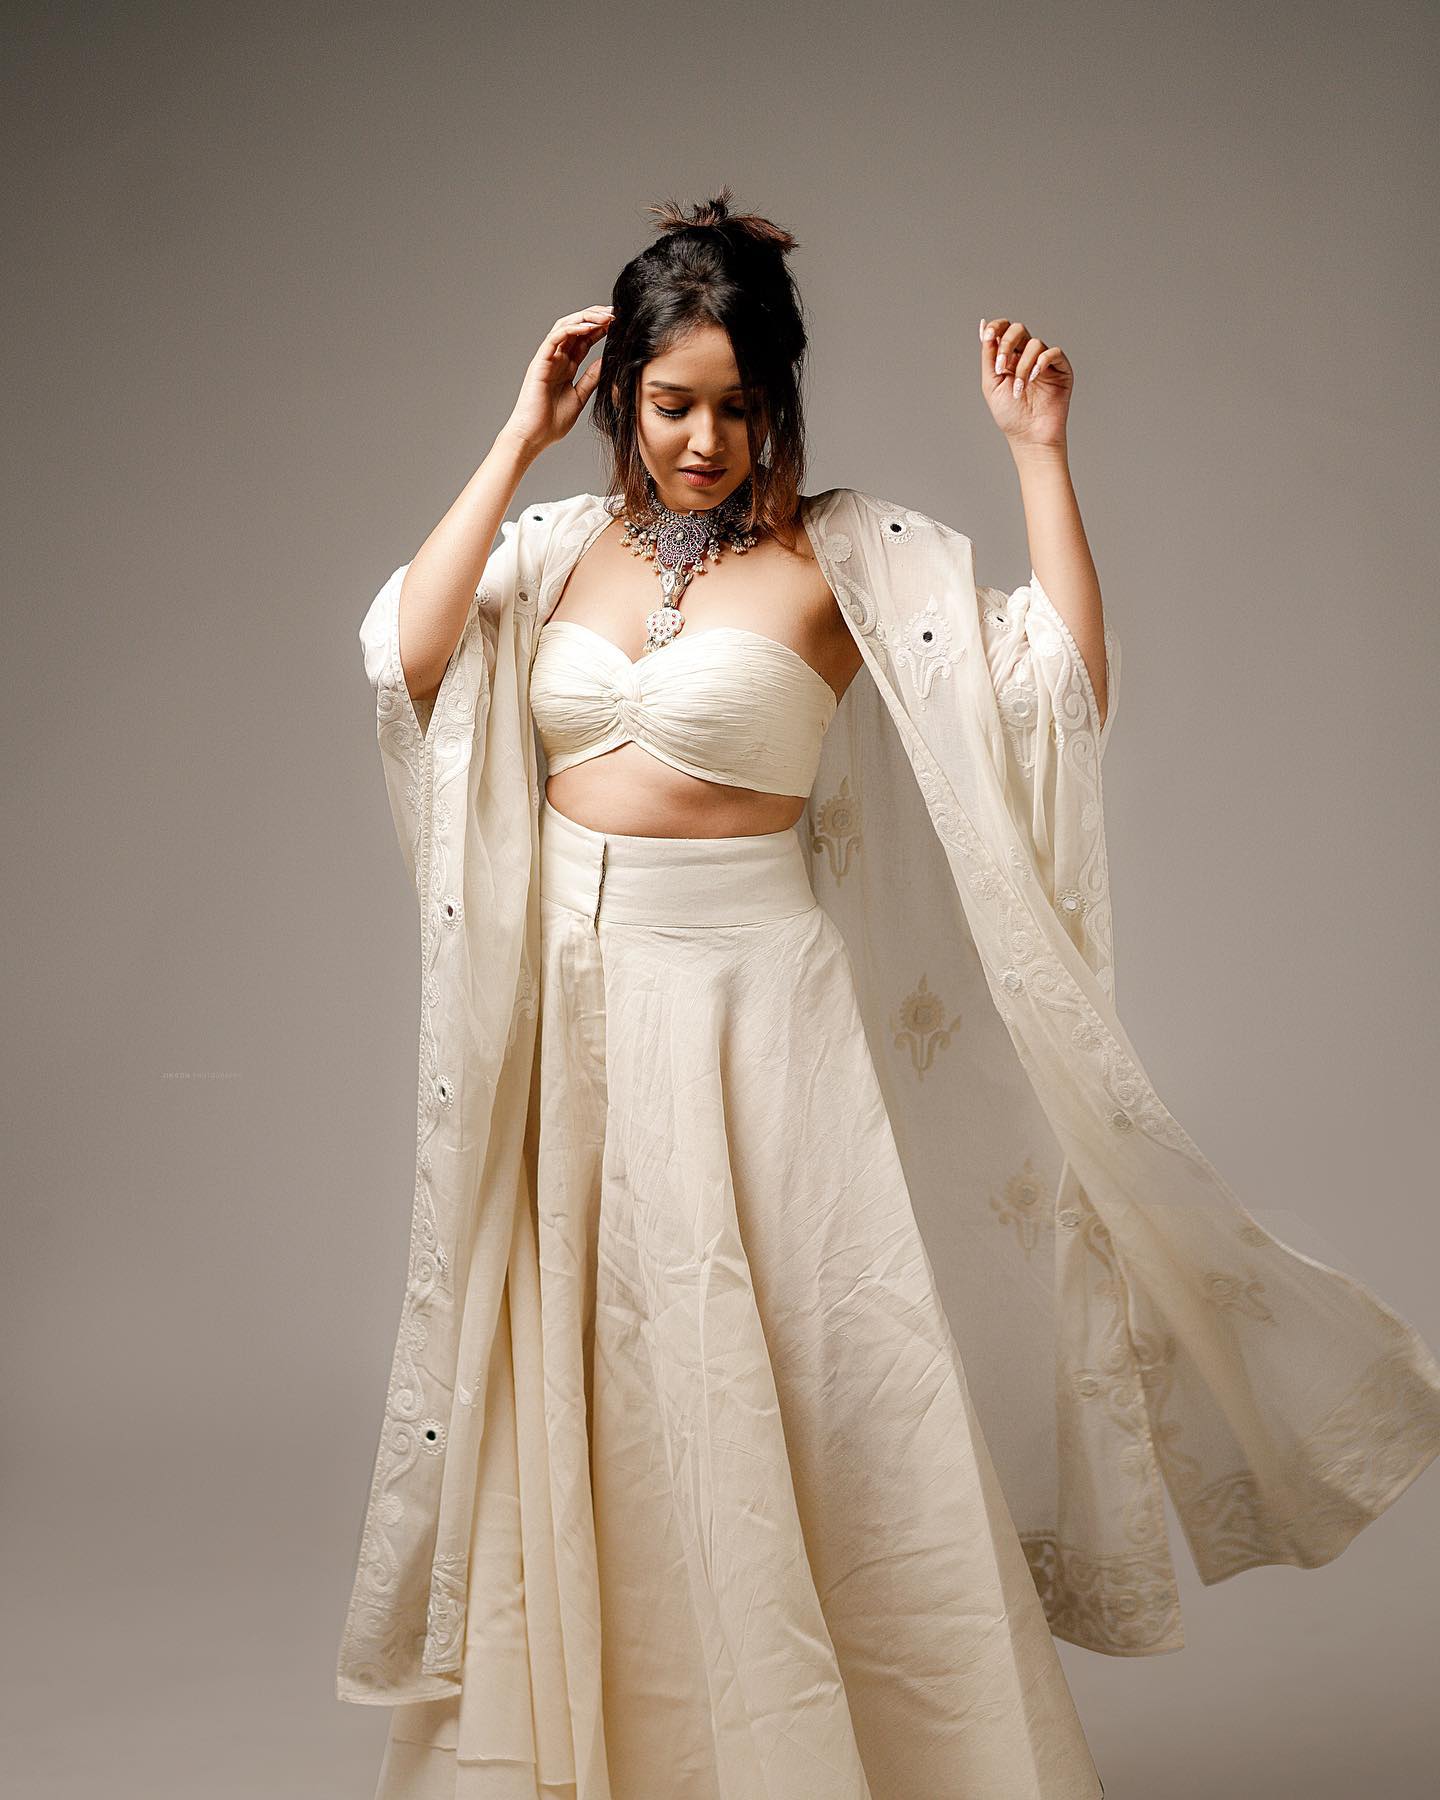 anikha-surendran-in-off-white-dress-photoshoot-latest-009